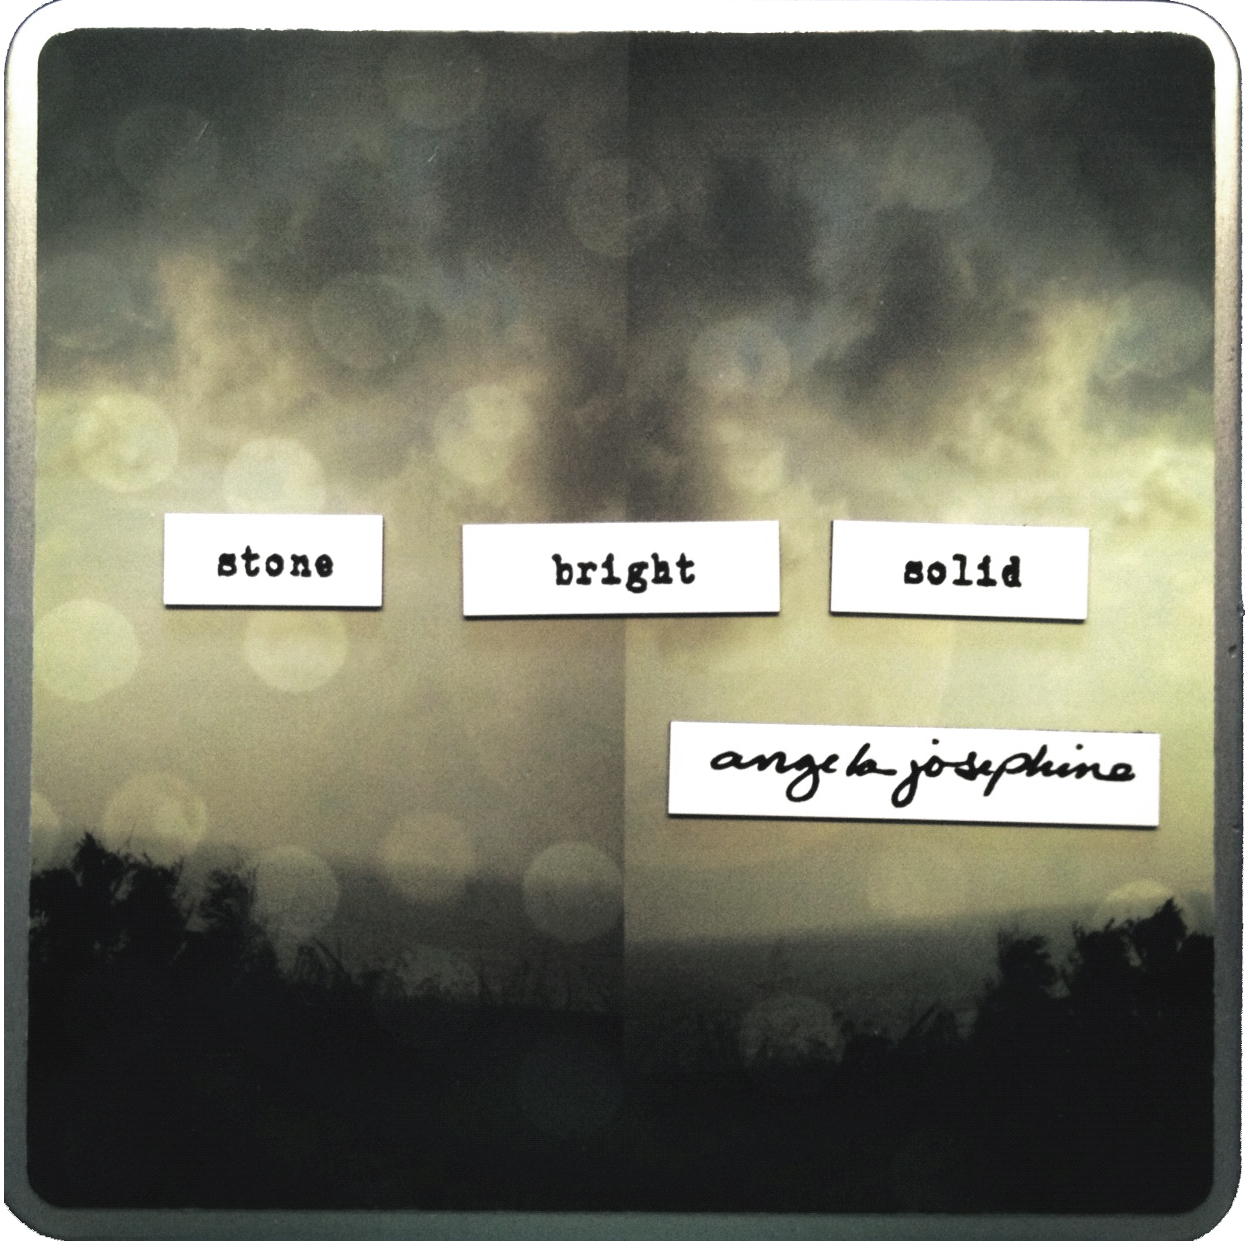 Stone Bright Solid - V1 - Angela Josephine